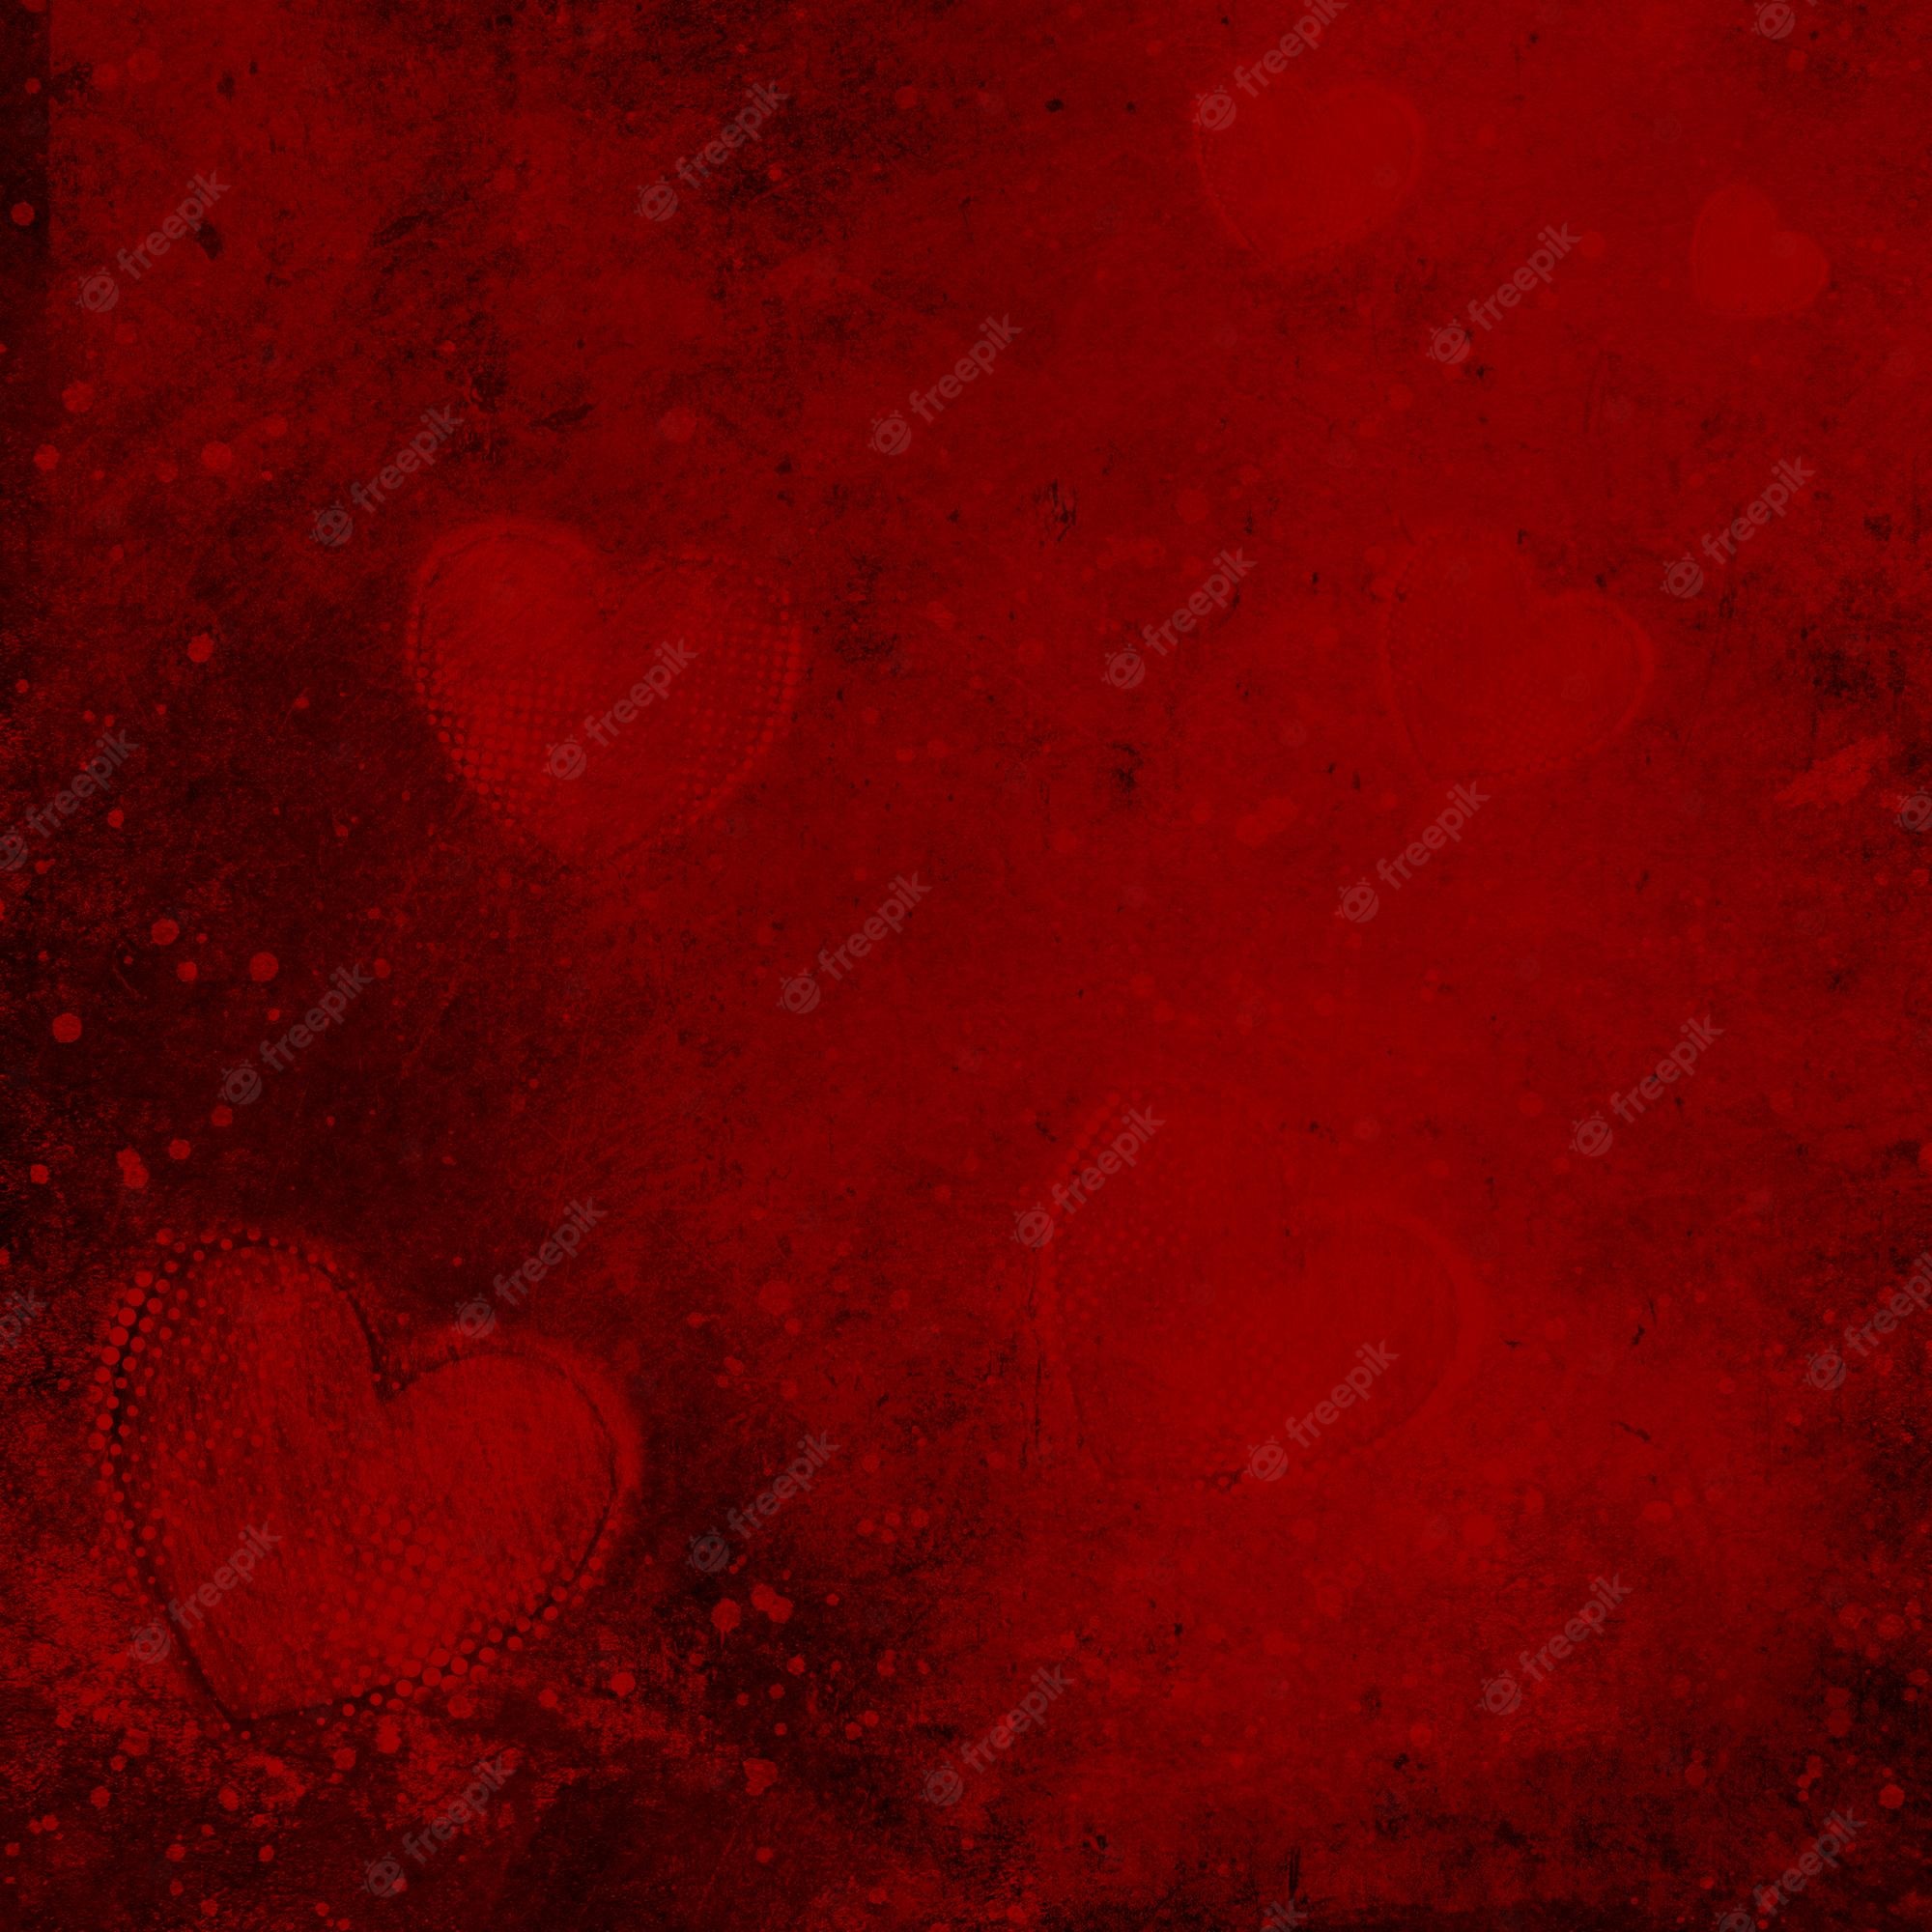 Red Valentines Background Image